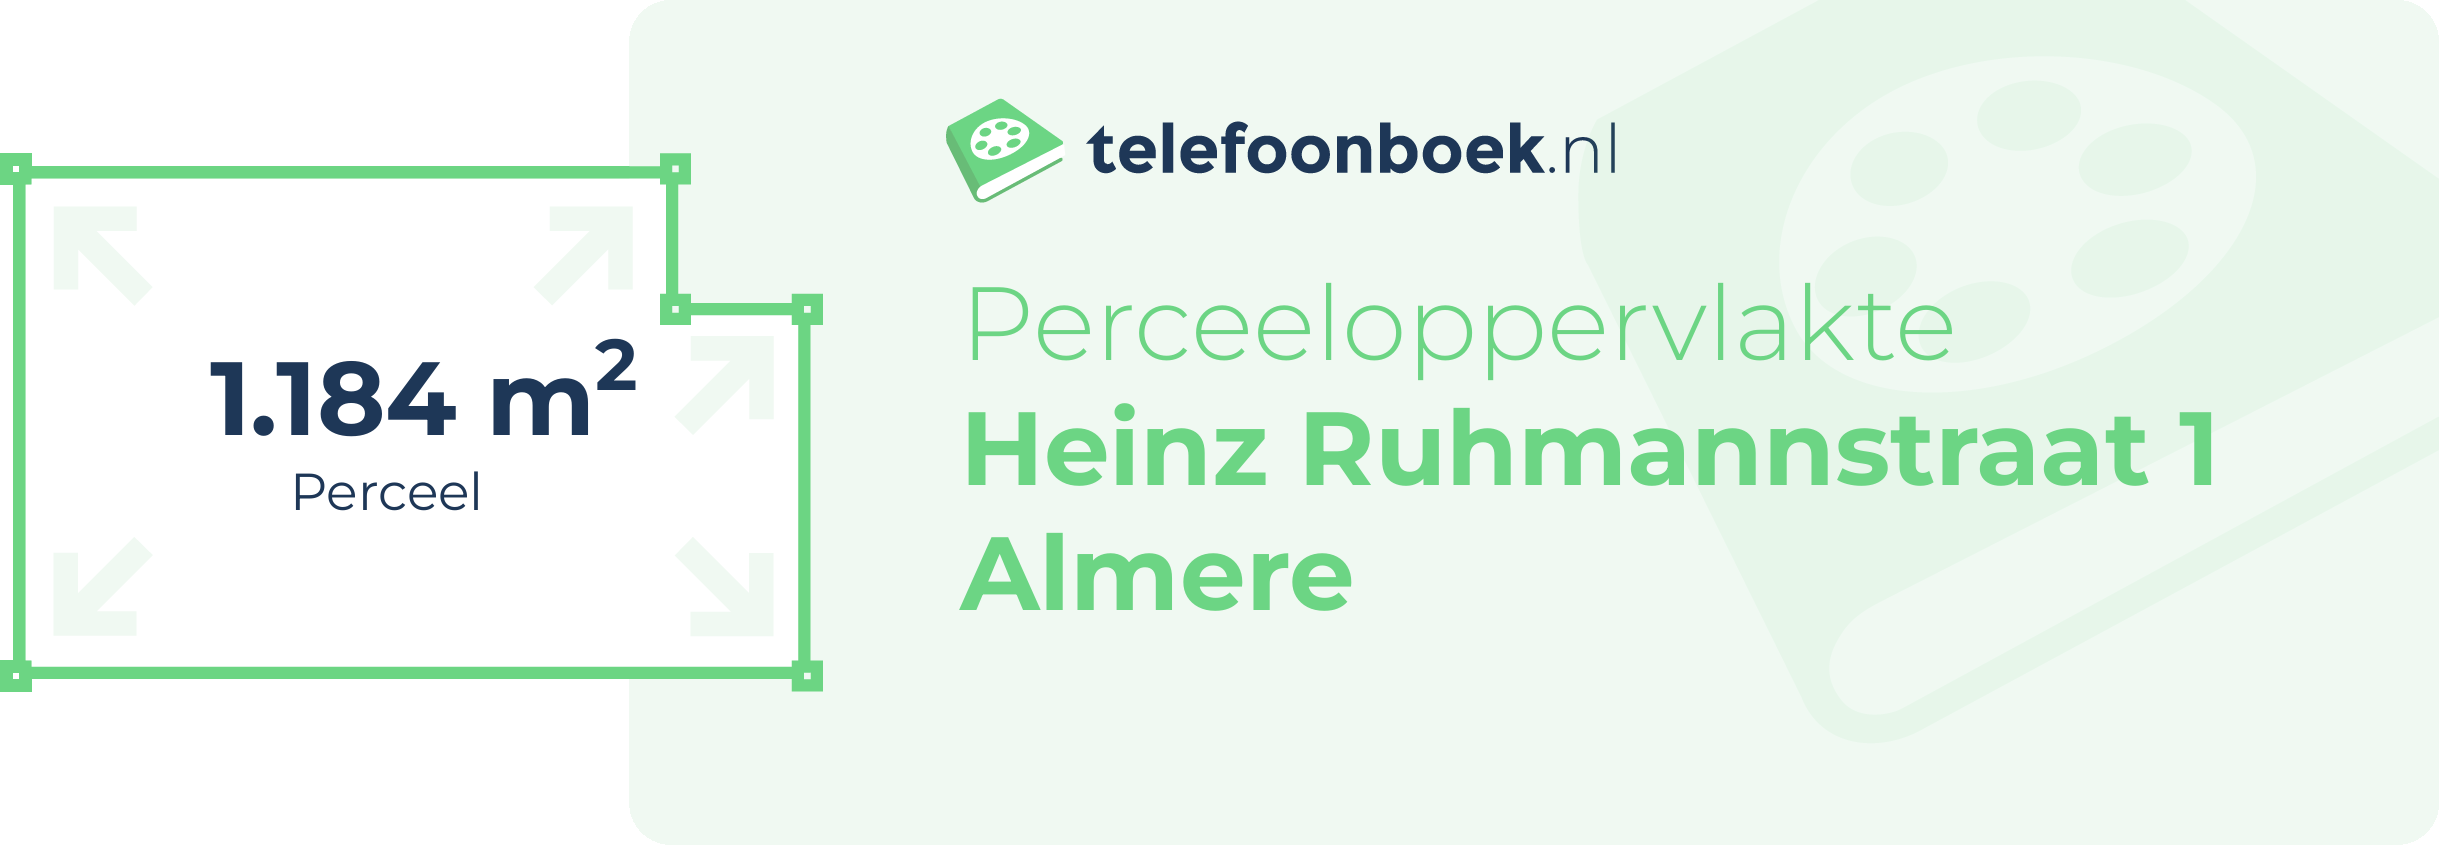 Perceeloppervlakte Heinz Ruhmannstraat 1 Almere